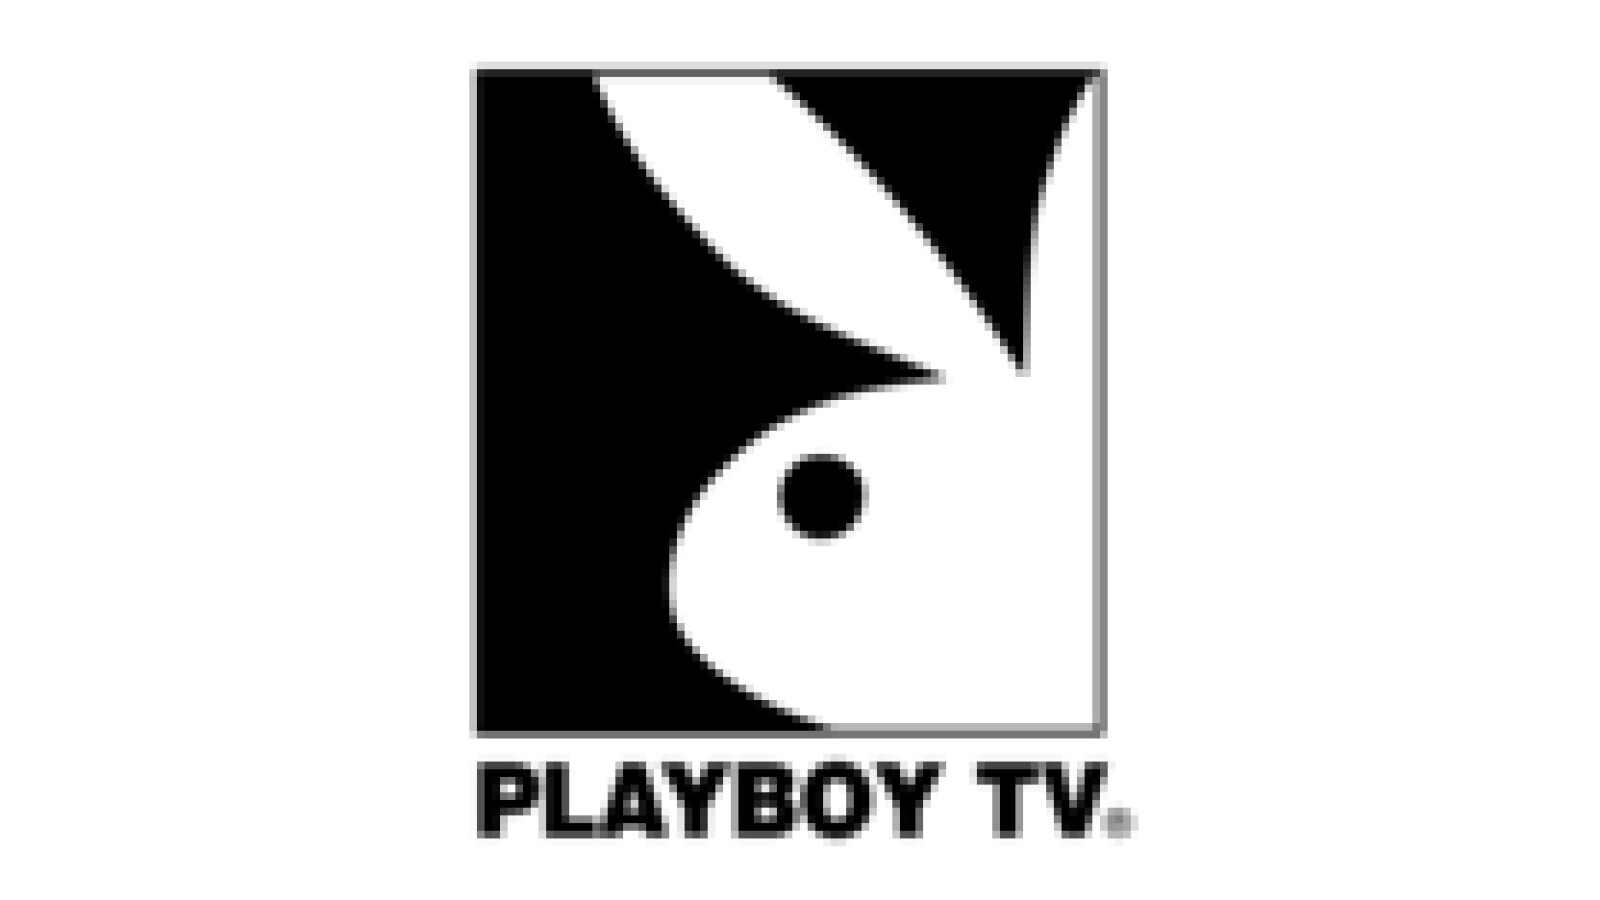 Playboy Tv Online Streaming